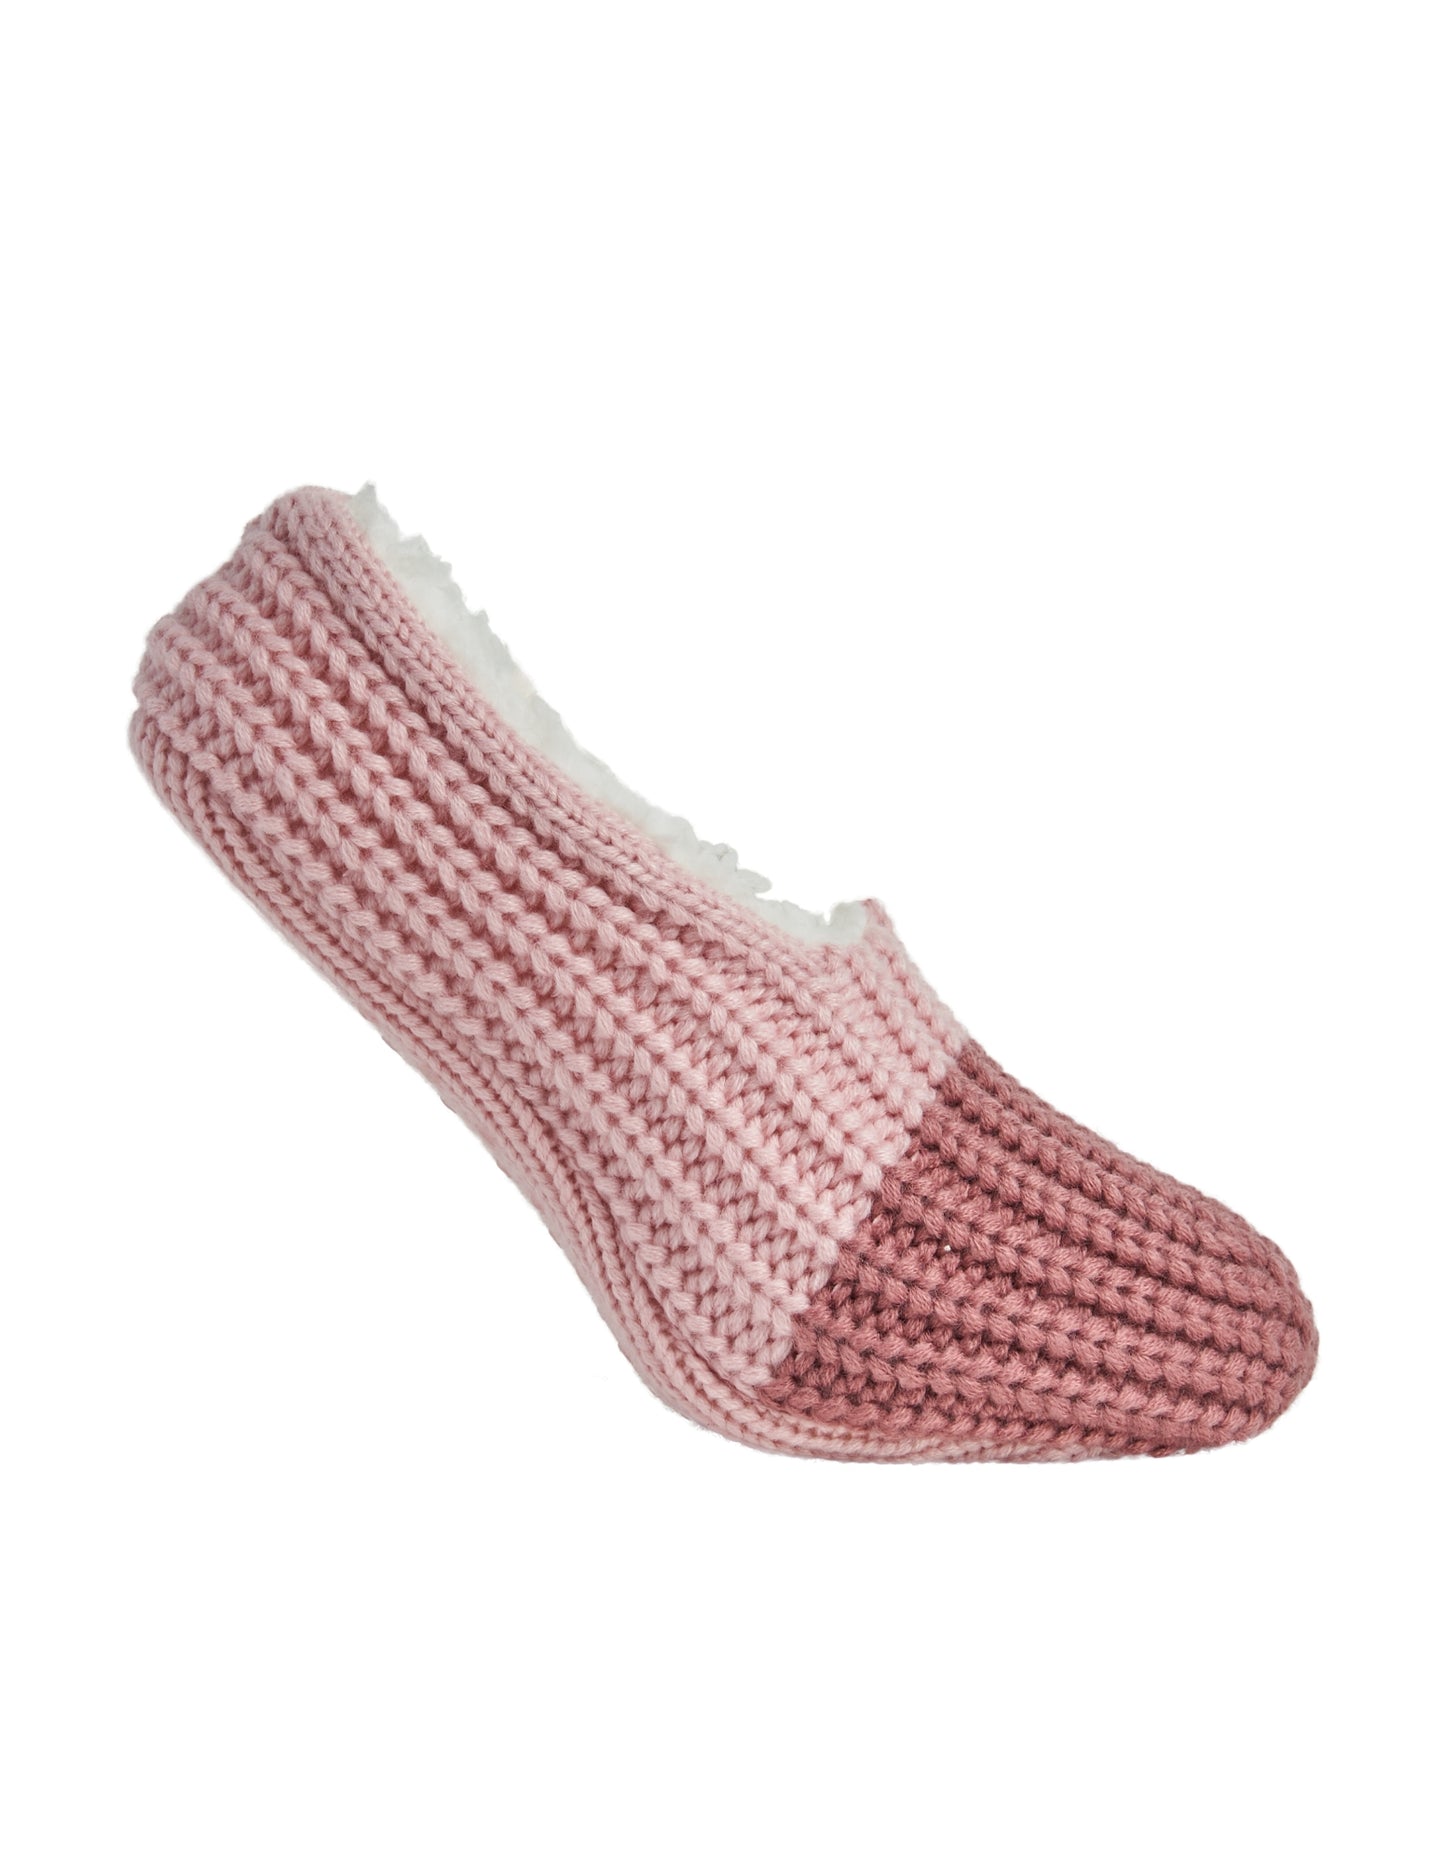 Side of Simon de Winter Women's Slipper Home Socks in Soft Pink/Cinnamon